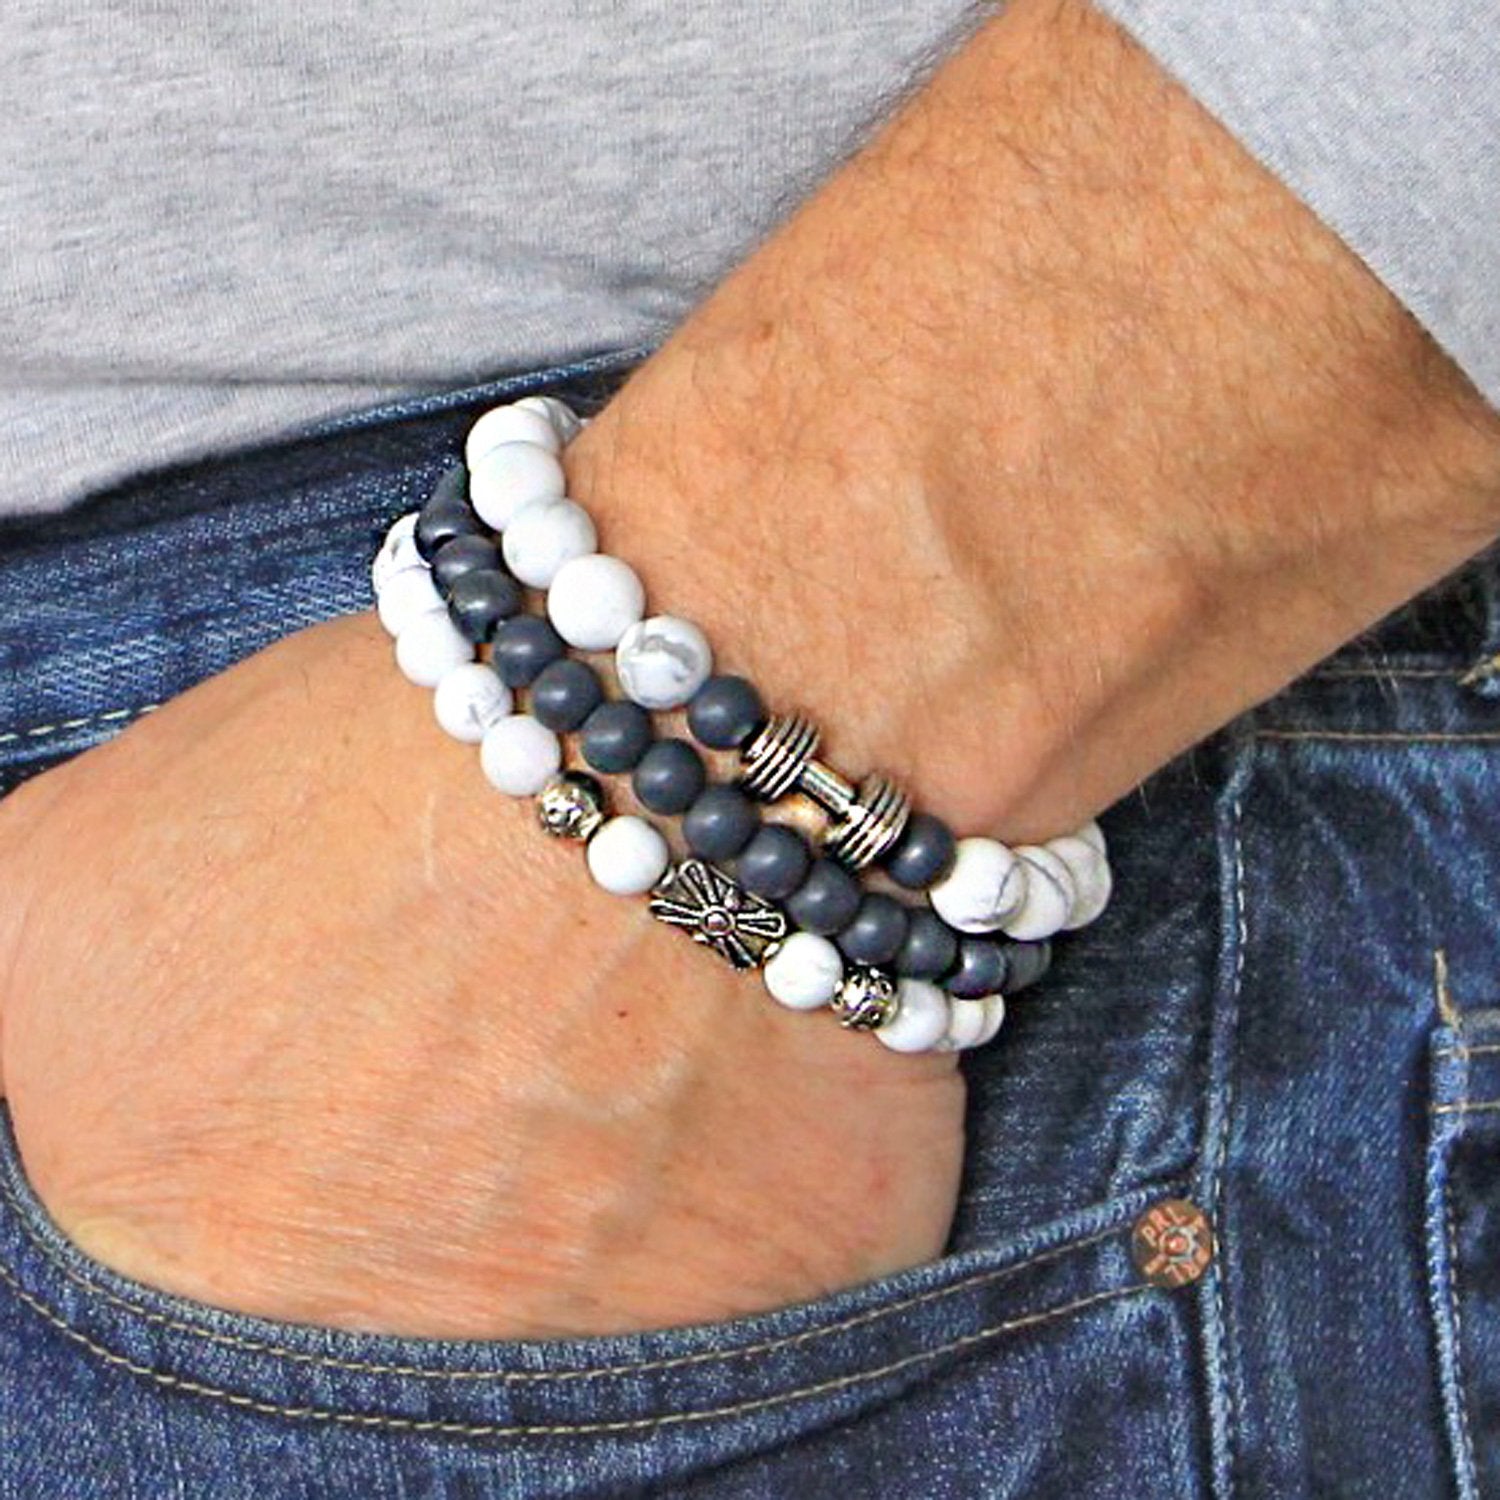 Men's Bracelets Set of 3 Beaded Stretch Bracelets Stack in Marbled White and Greys - M13